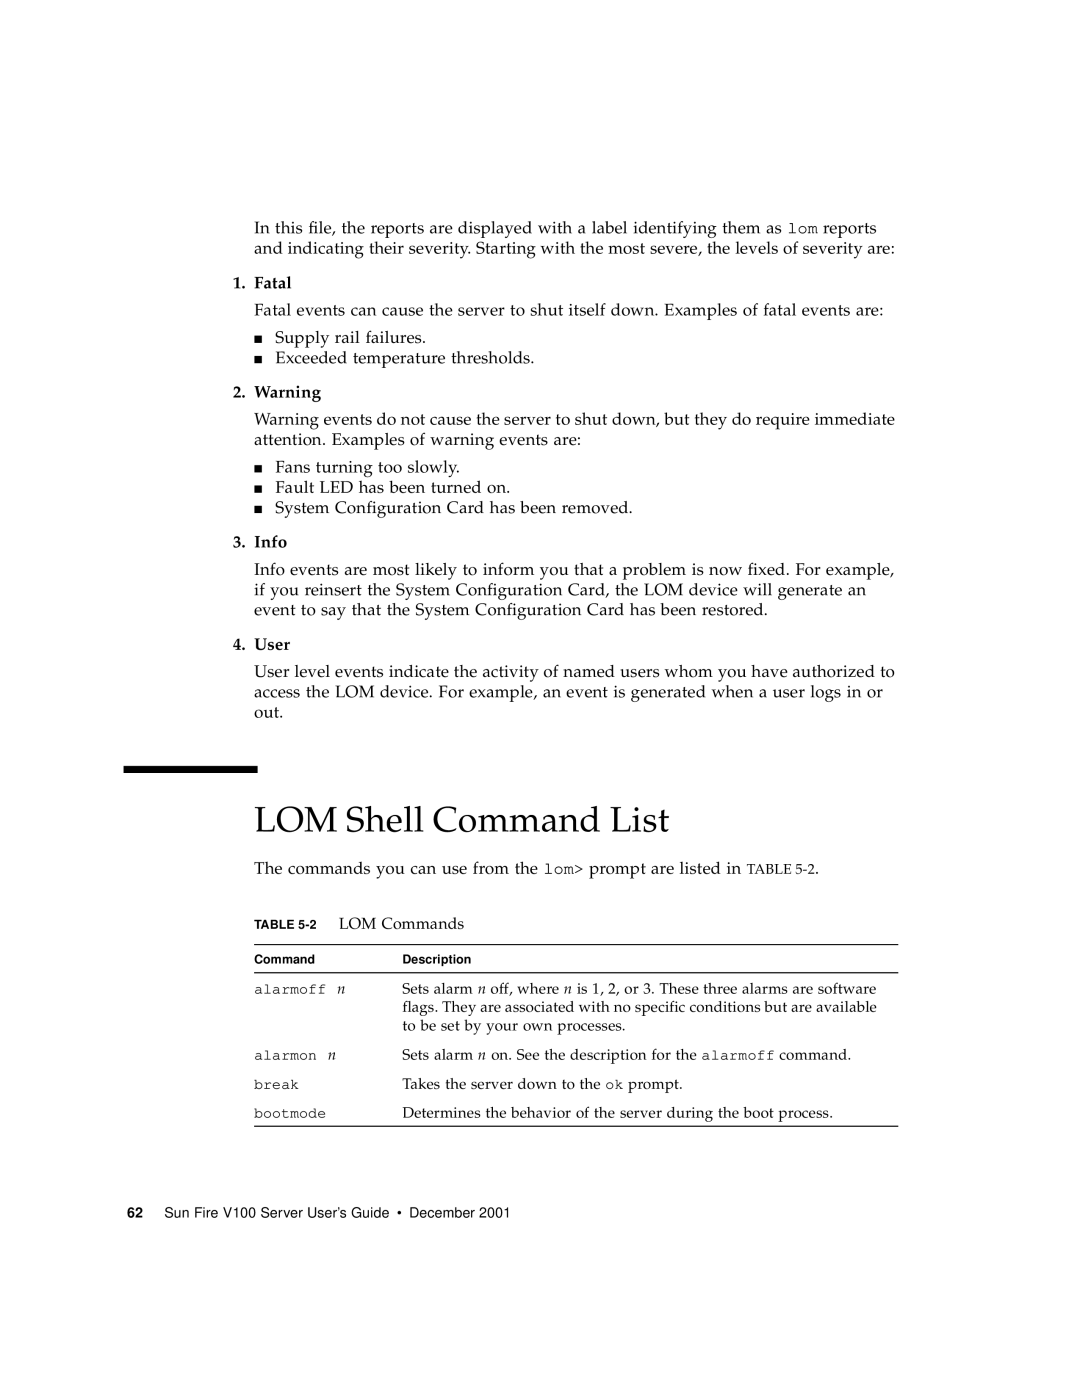 Sun Microsystems Sun Fire V100 manual LOM Shell Command List, Fatal, Warning, Info, User 